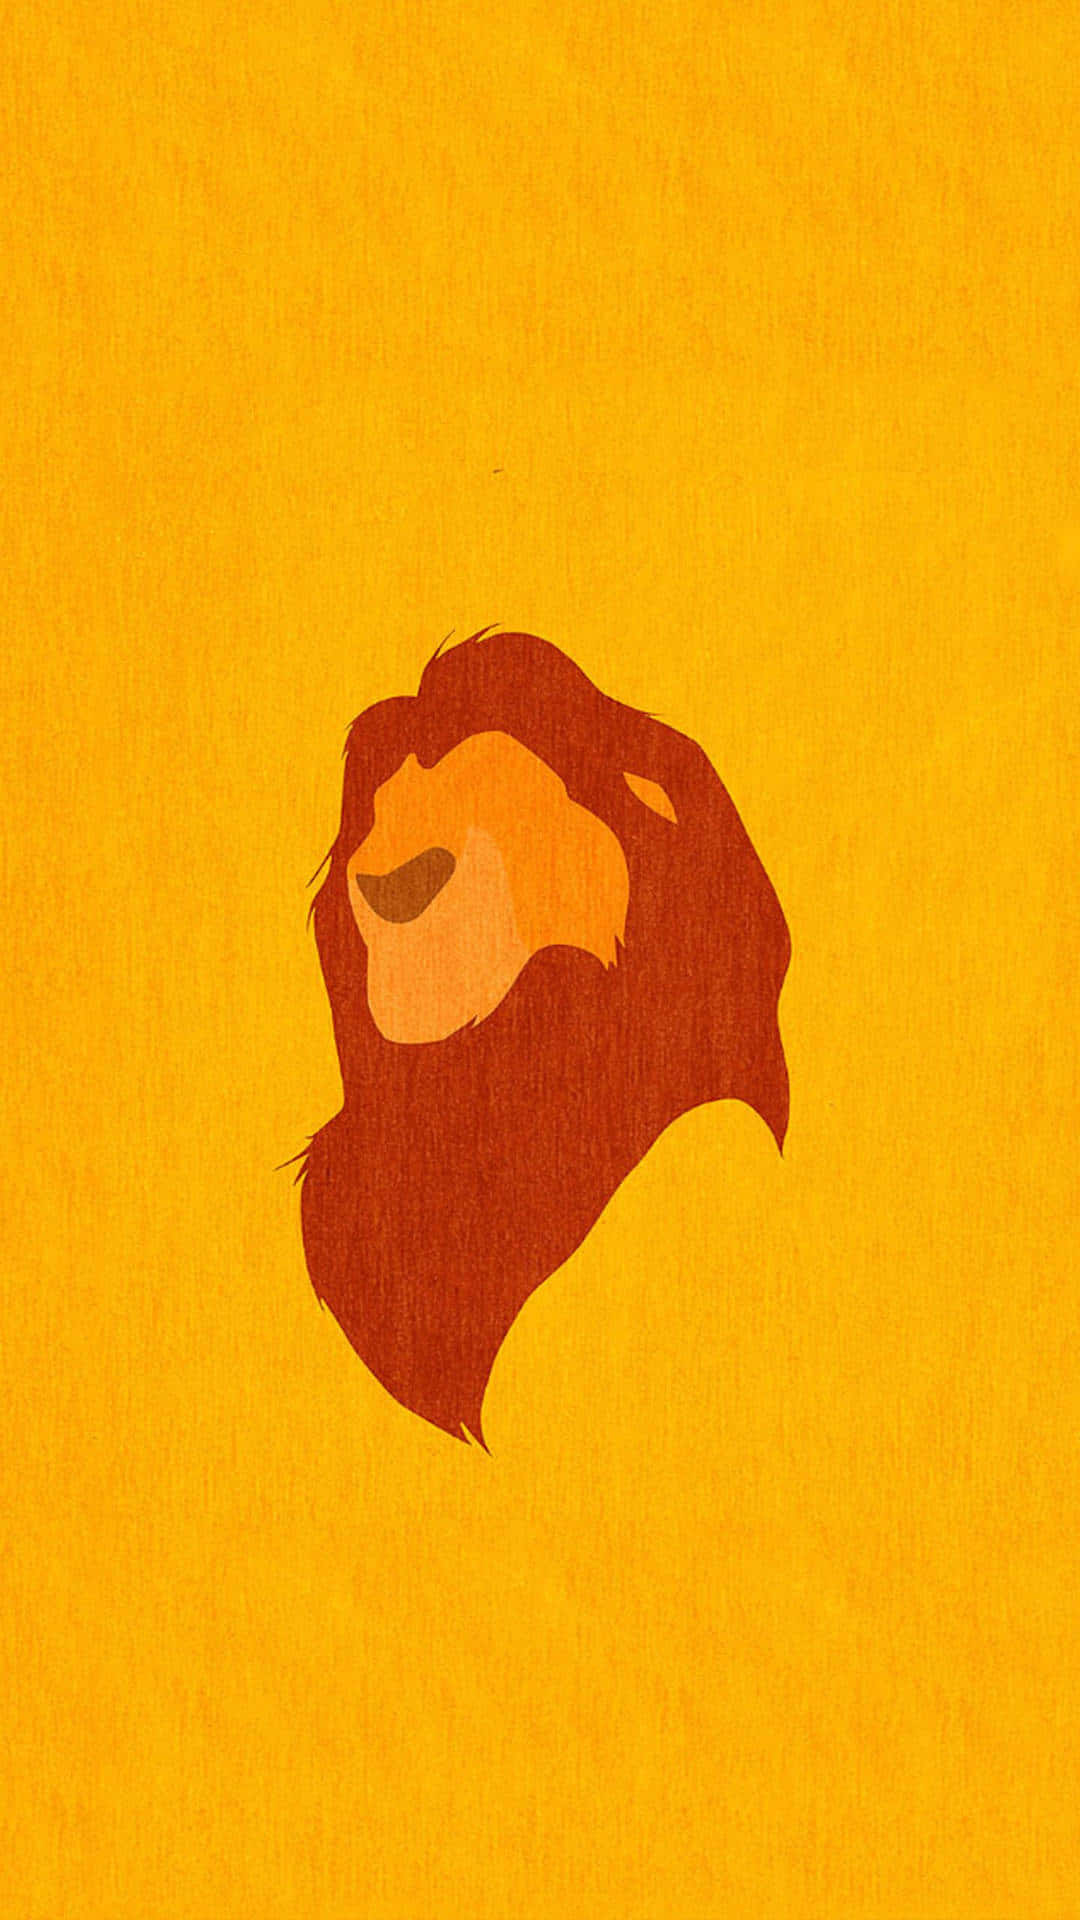 Simba Iconic Lion King Silhouette